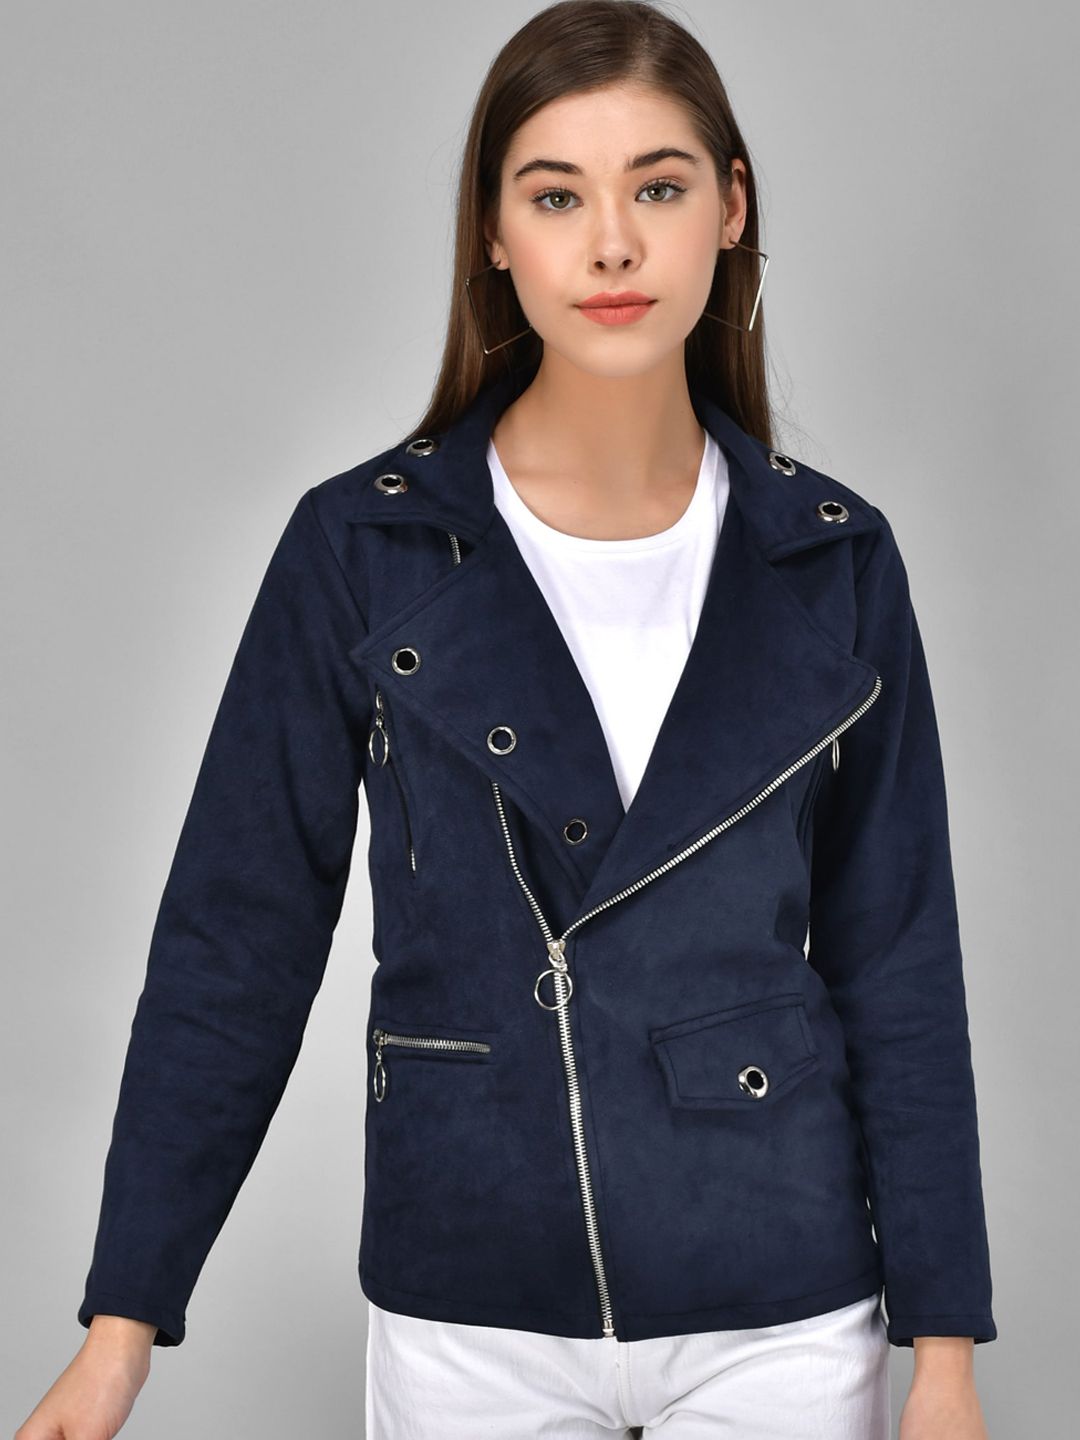 Darzi Women Navy Blue Tailored Jacket Price in India